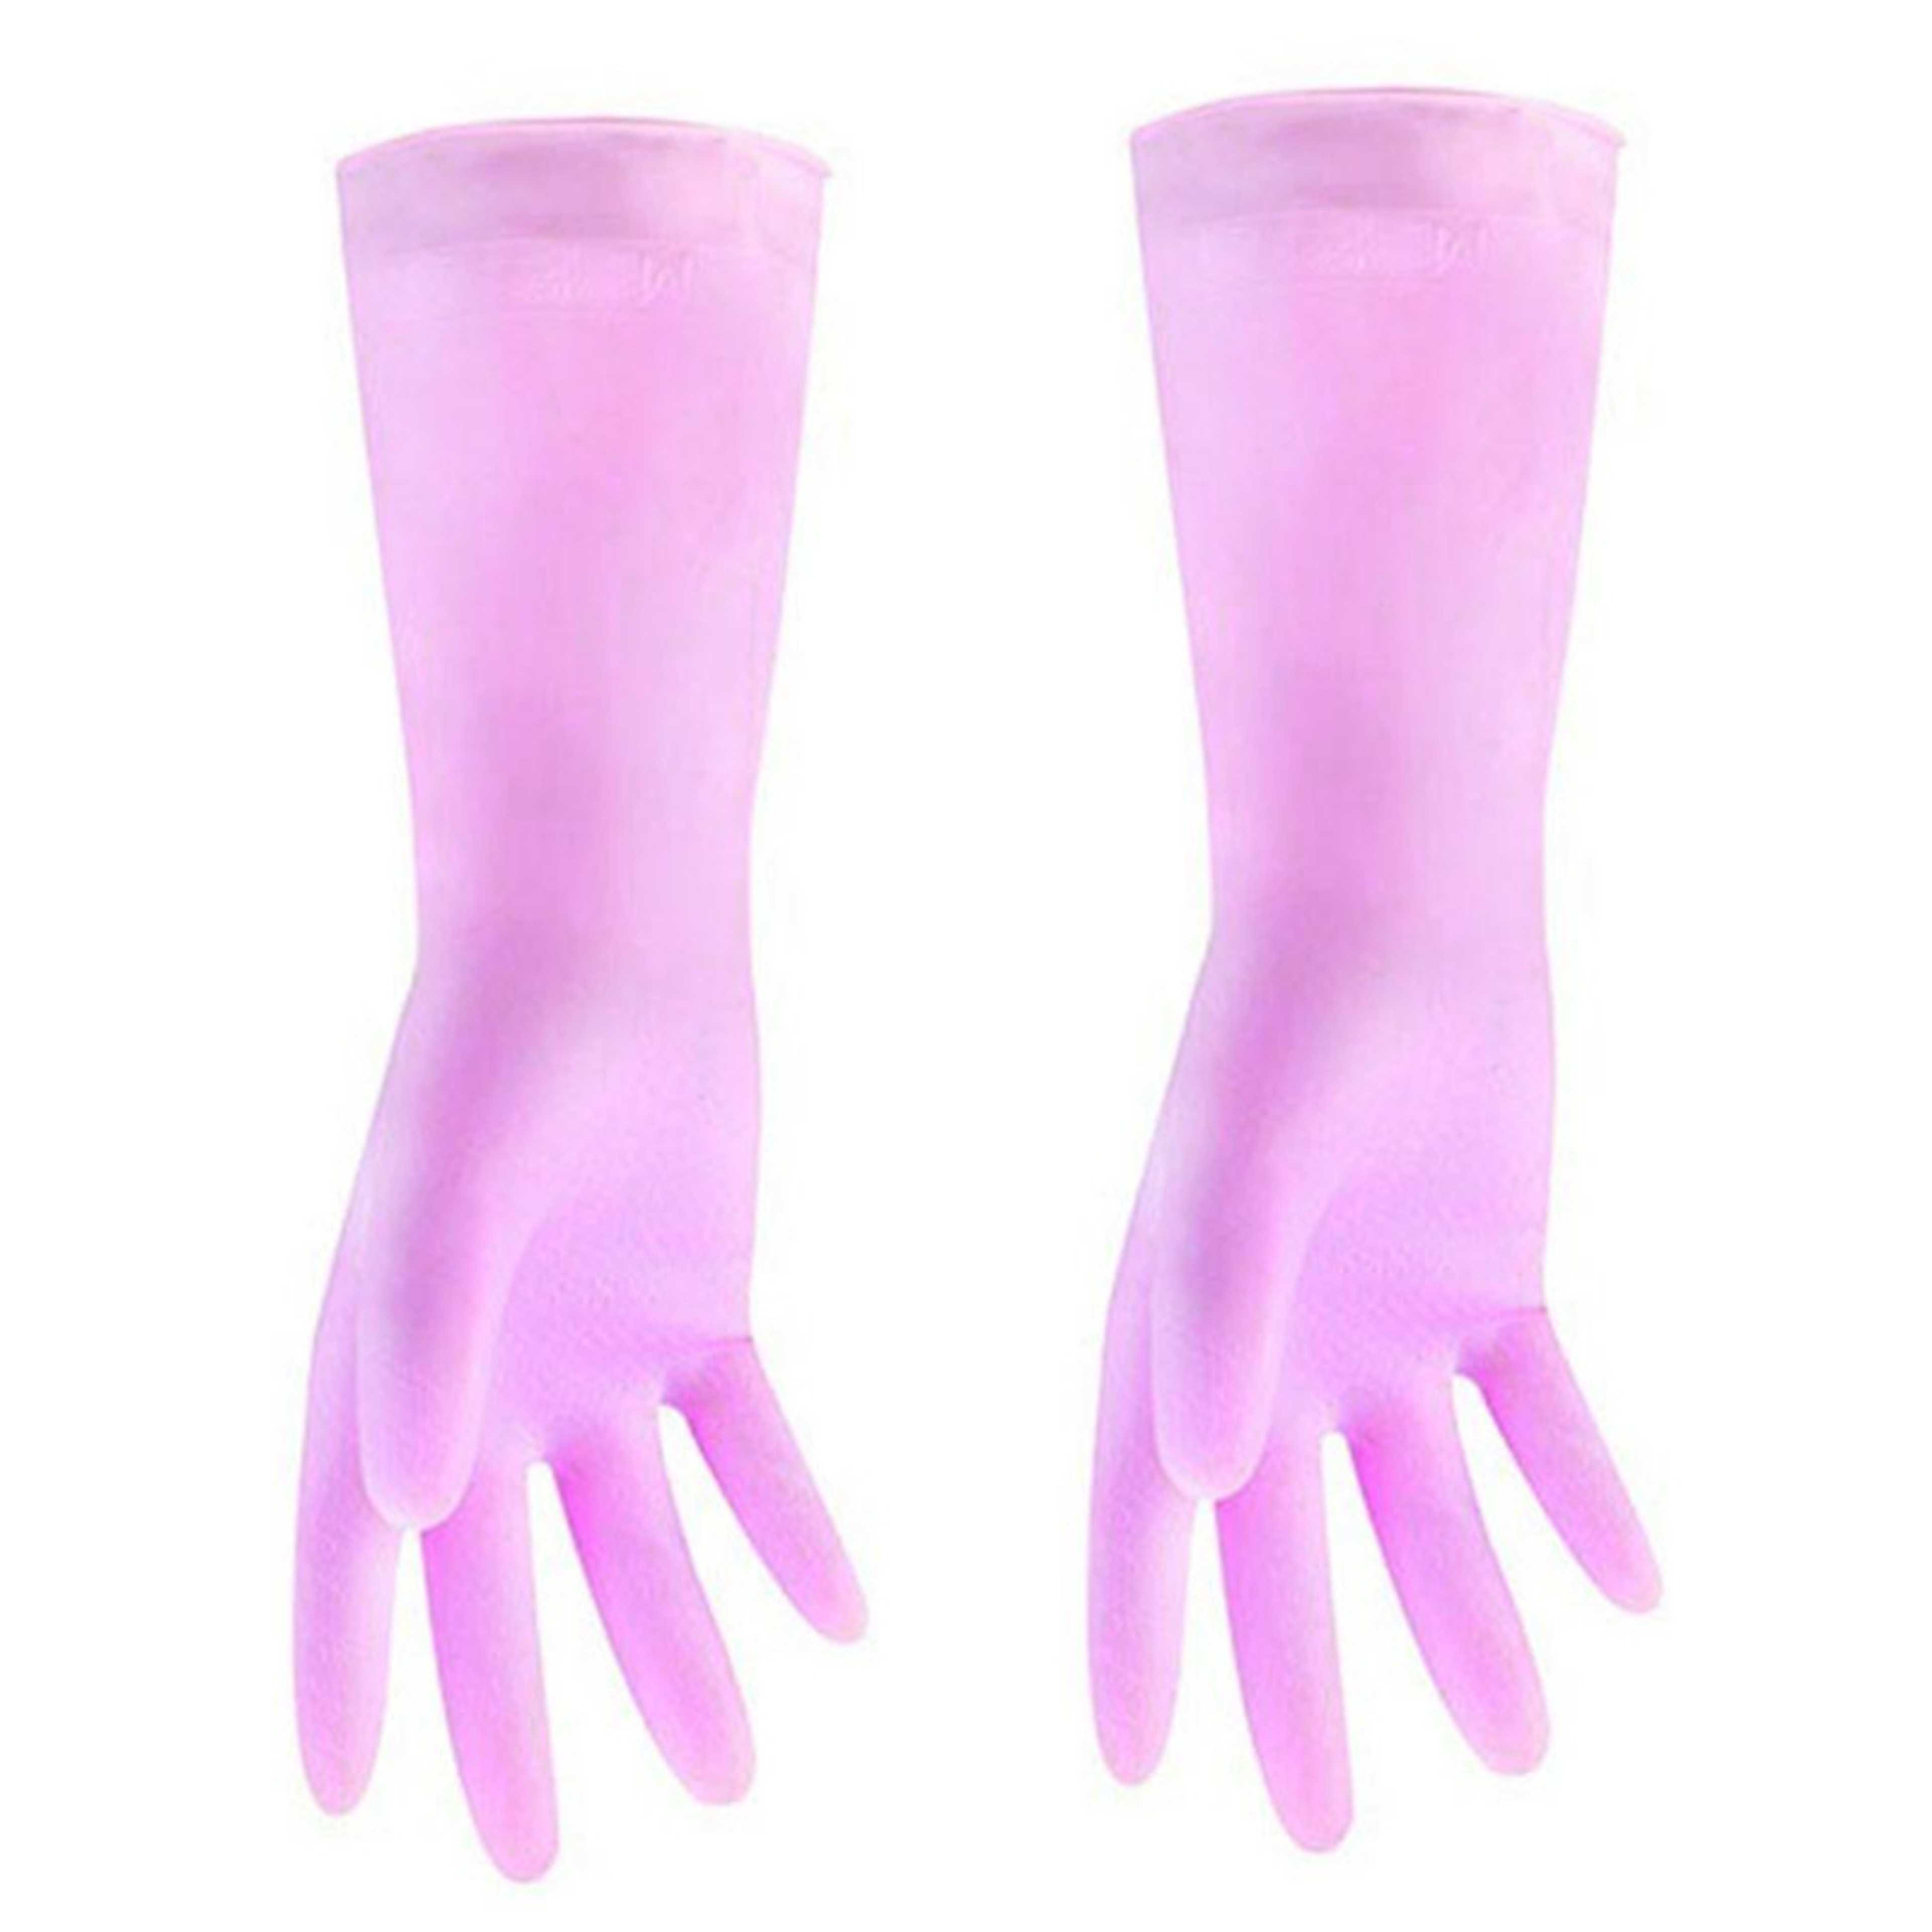 Rubber Washing Gloves- Pink